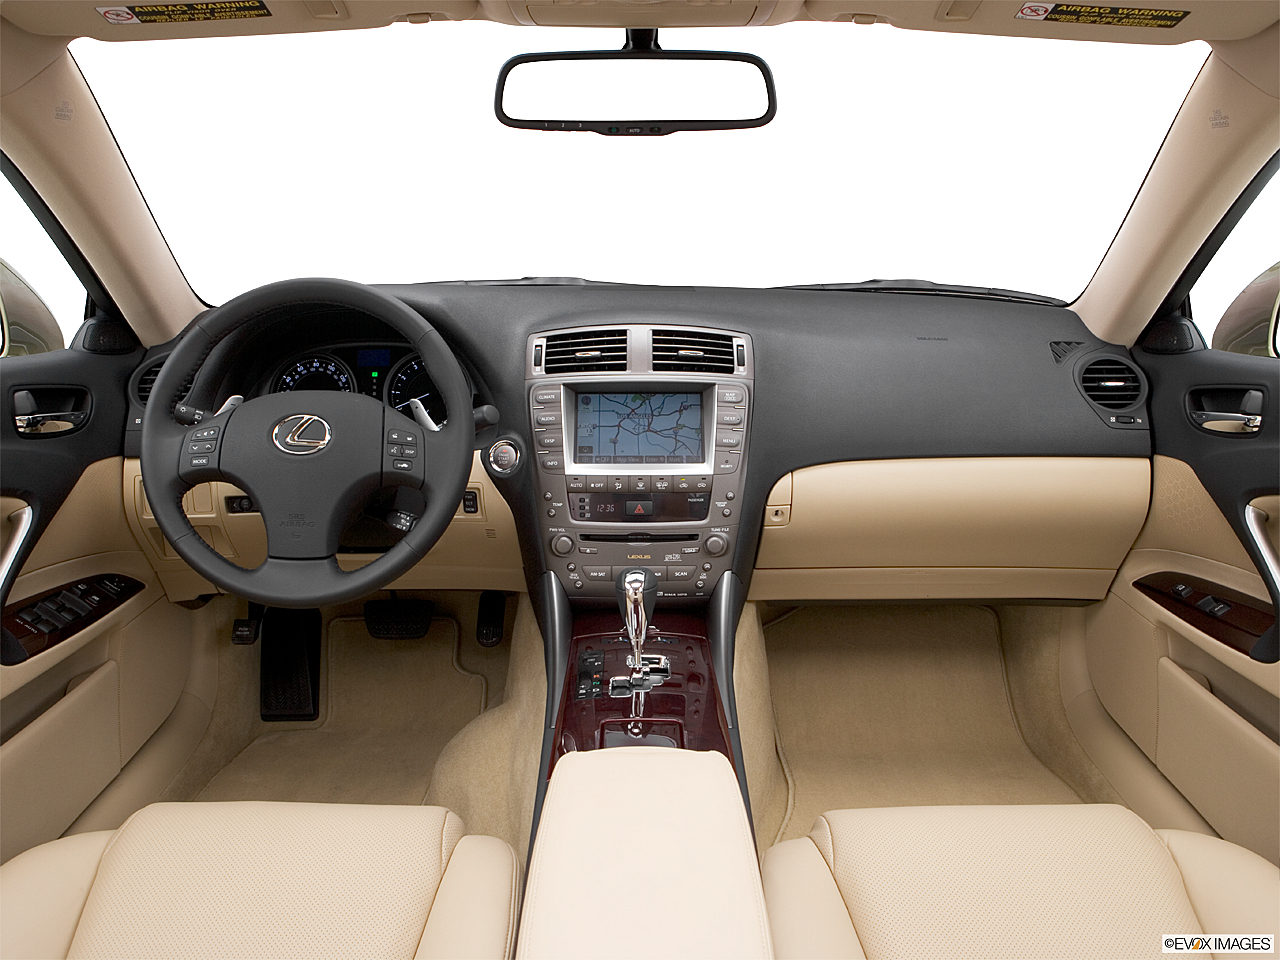 2006 Lexus IS 250 AWD 4dr Sedan - Research - GrooveCar